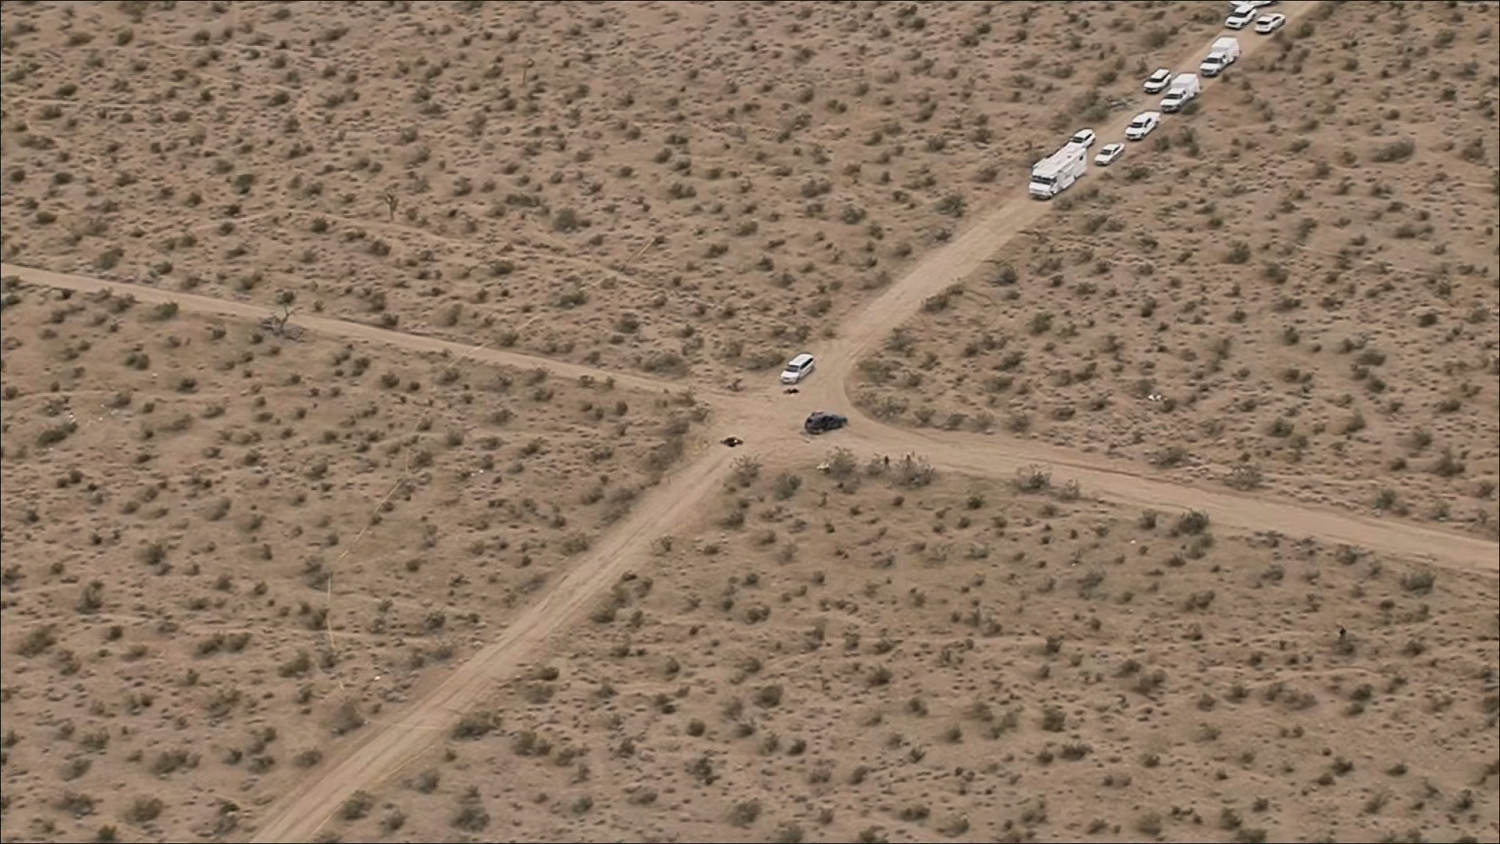 6 bodies found at remote crossroads in California's Mojave Desert